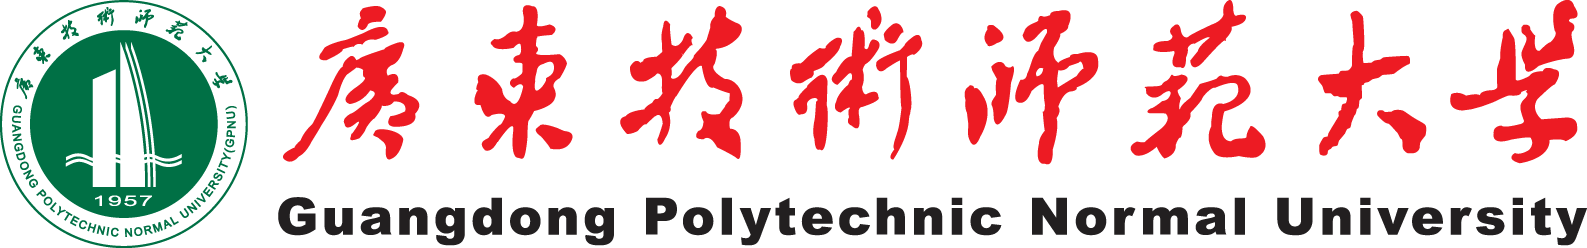 广技师logo.png